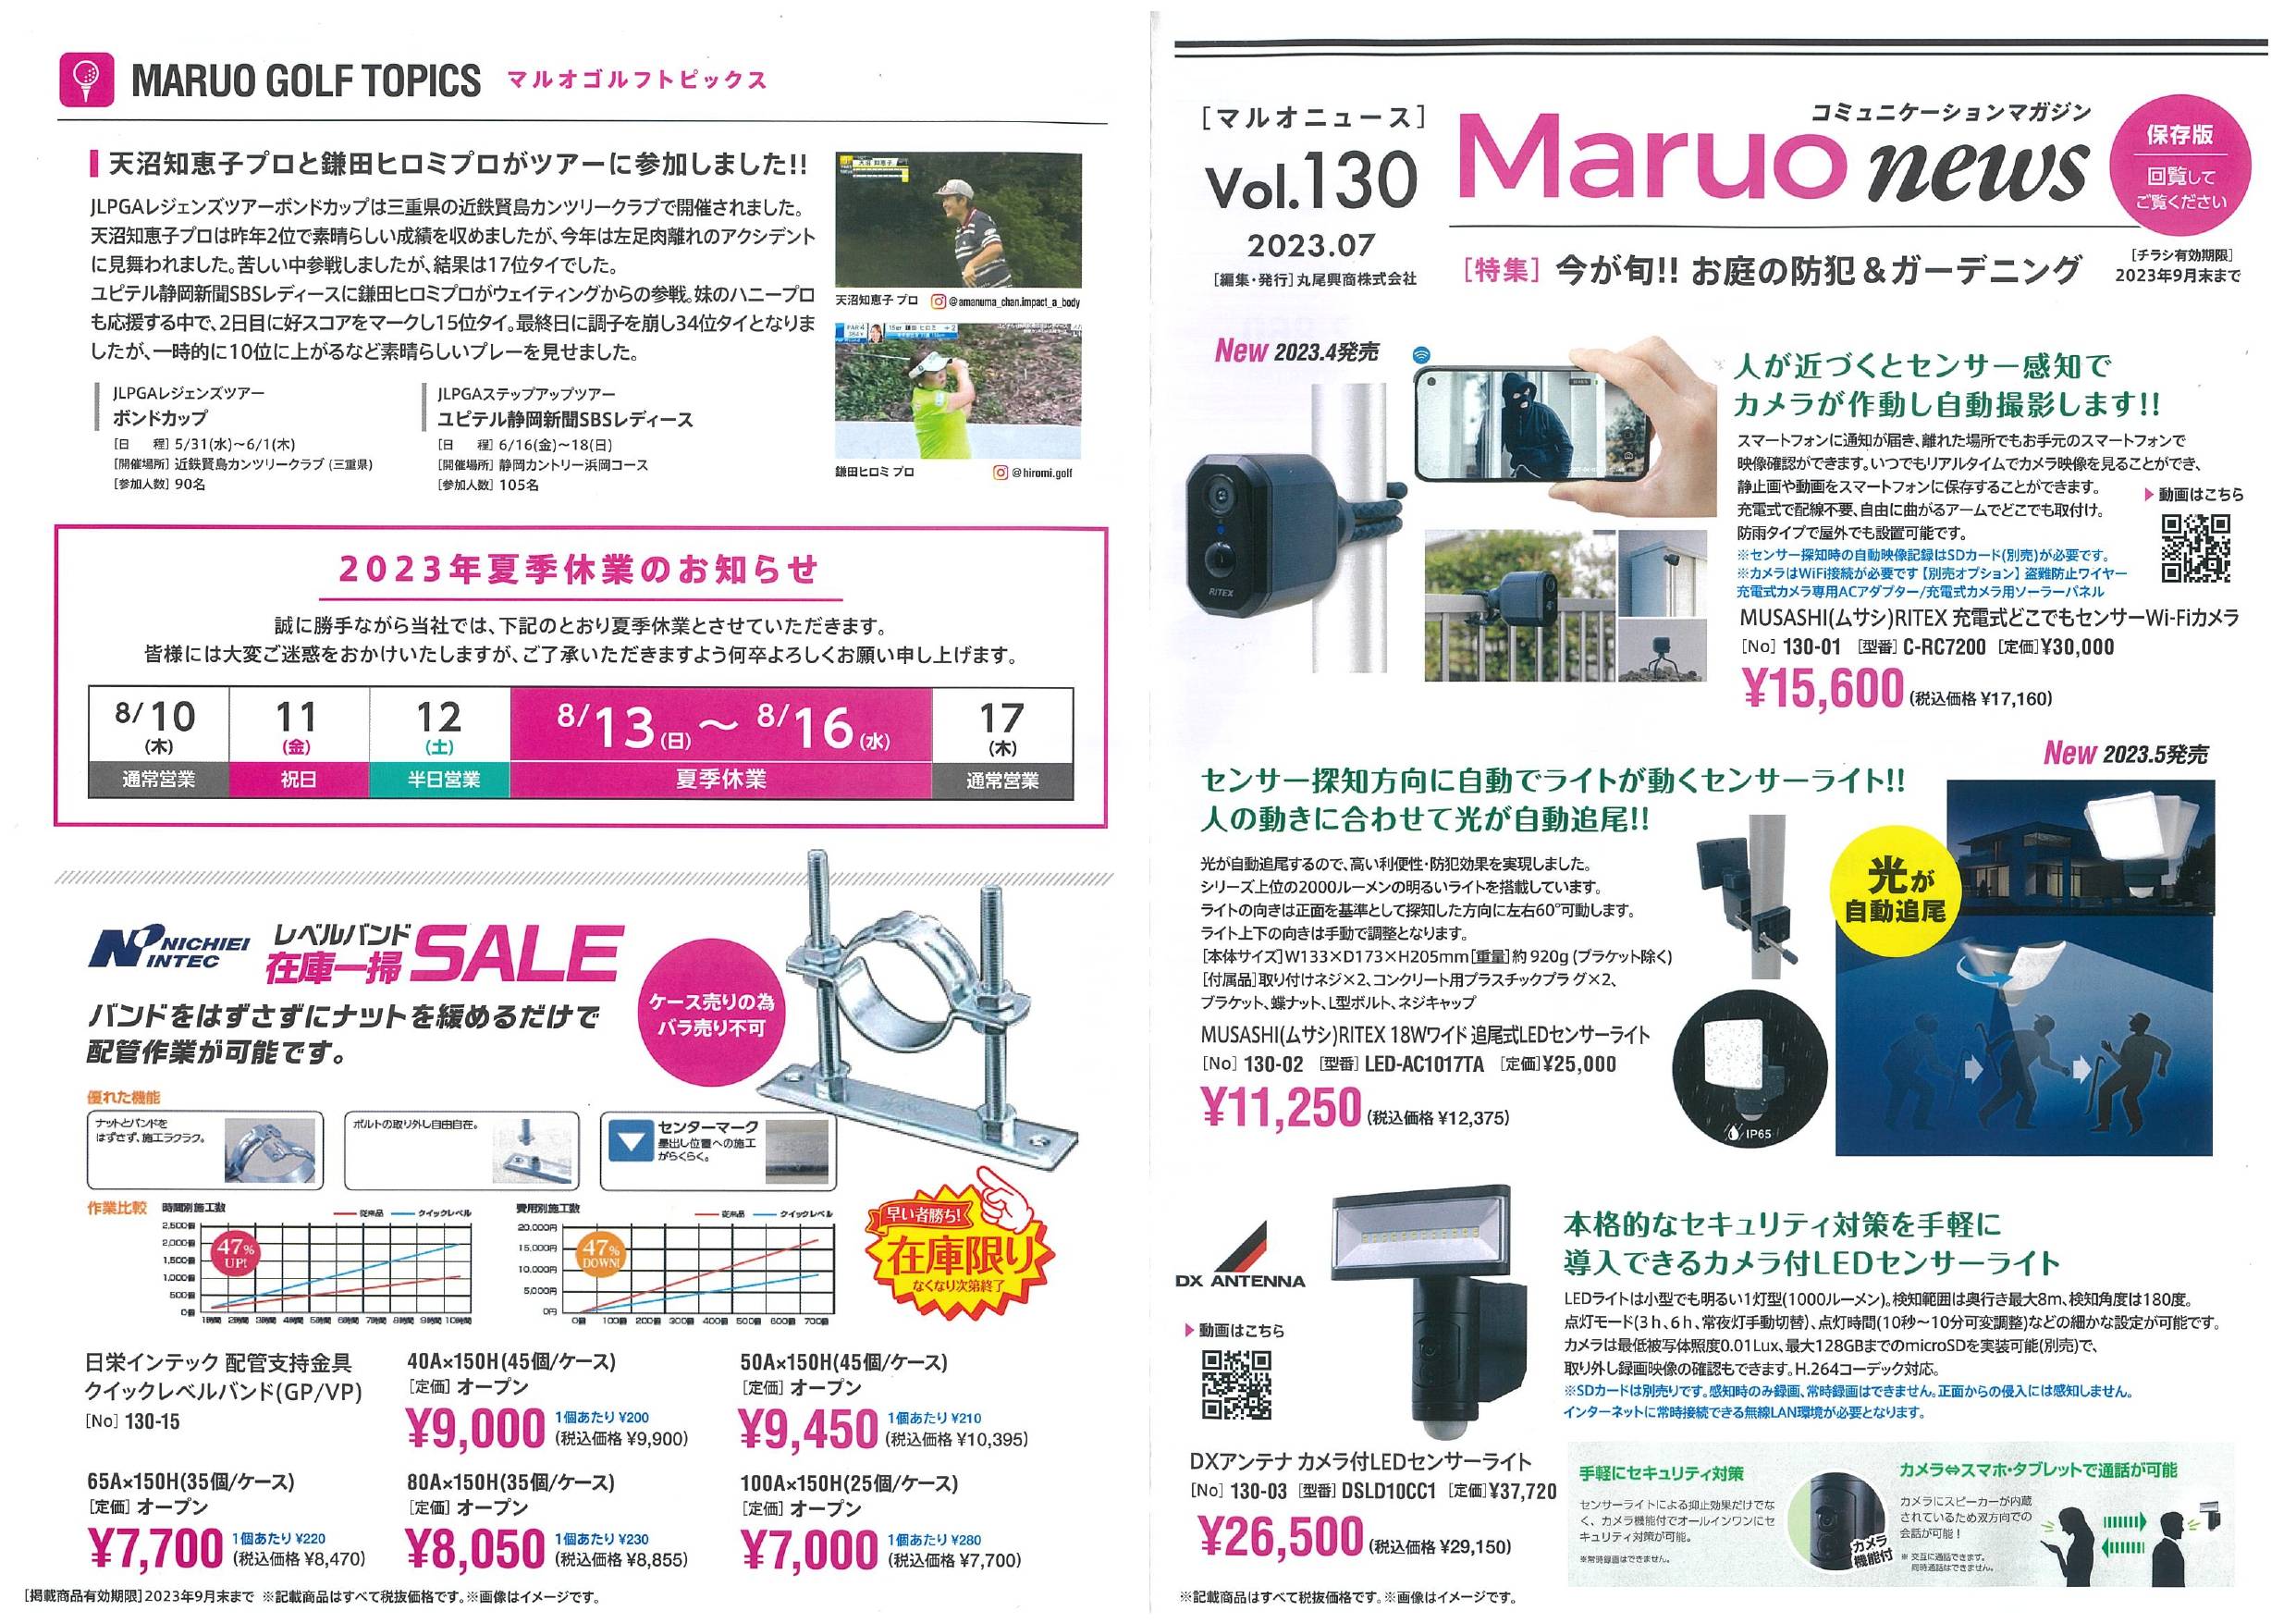 Maruo news Vol.130 松井トーヨー住建のイベントキャンペーン 写真1